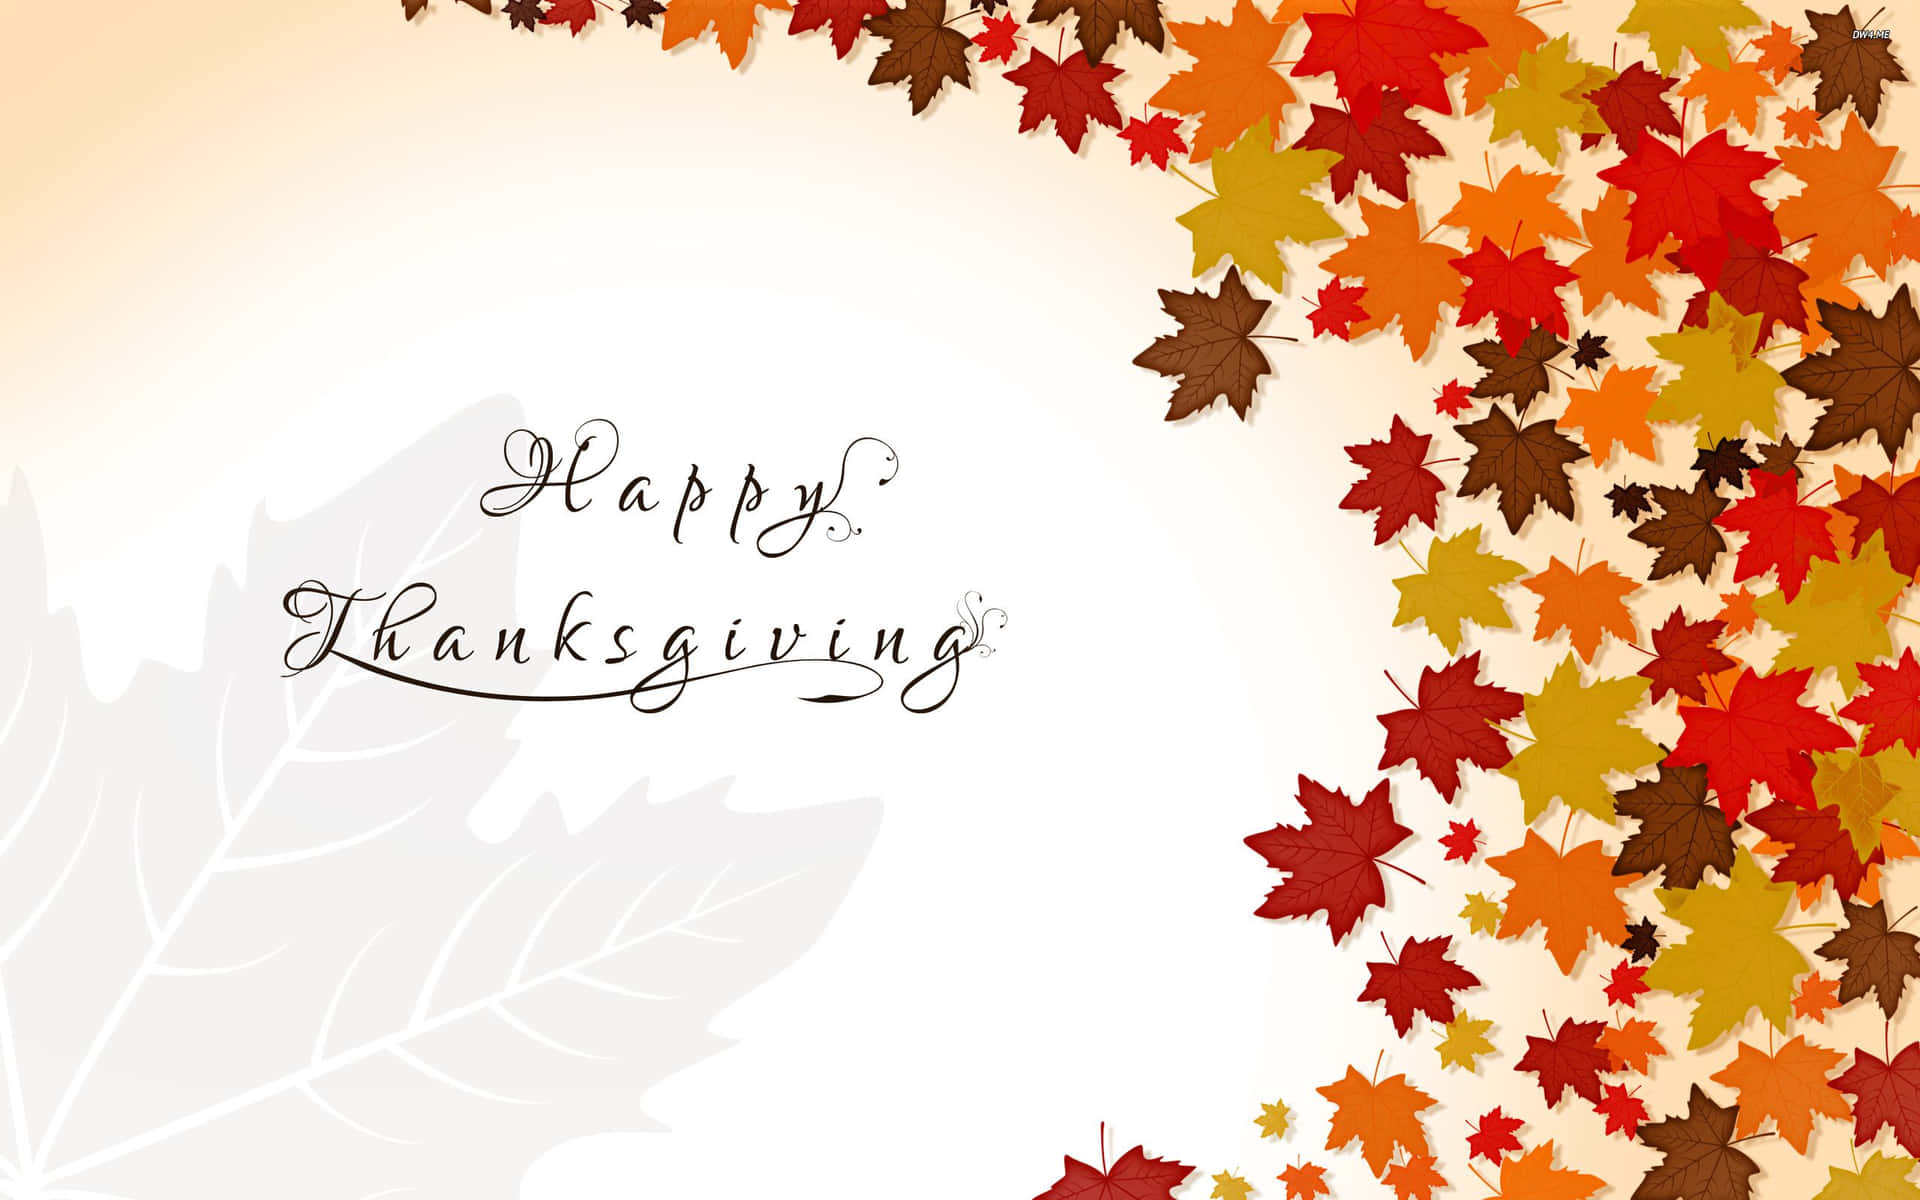 Celebrate Thanksgiving with Gratitude!